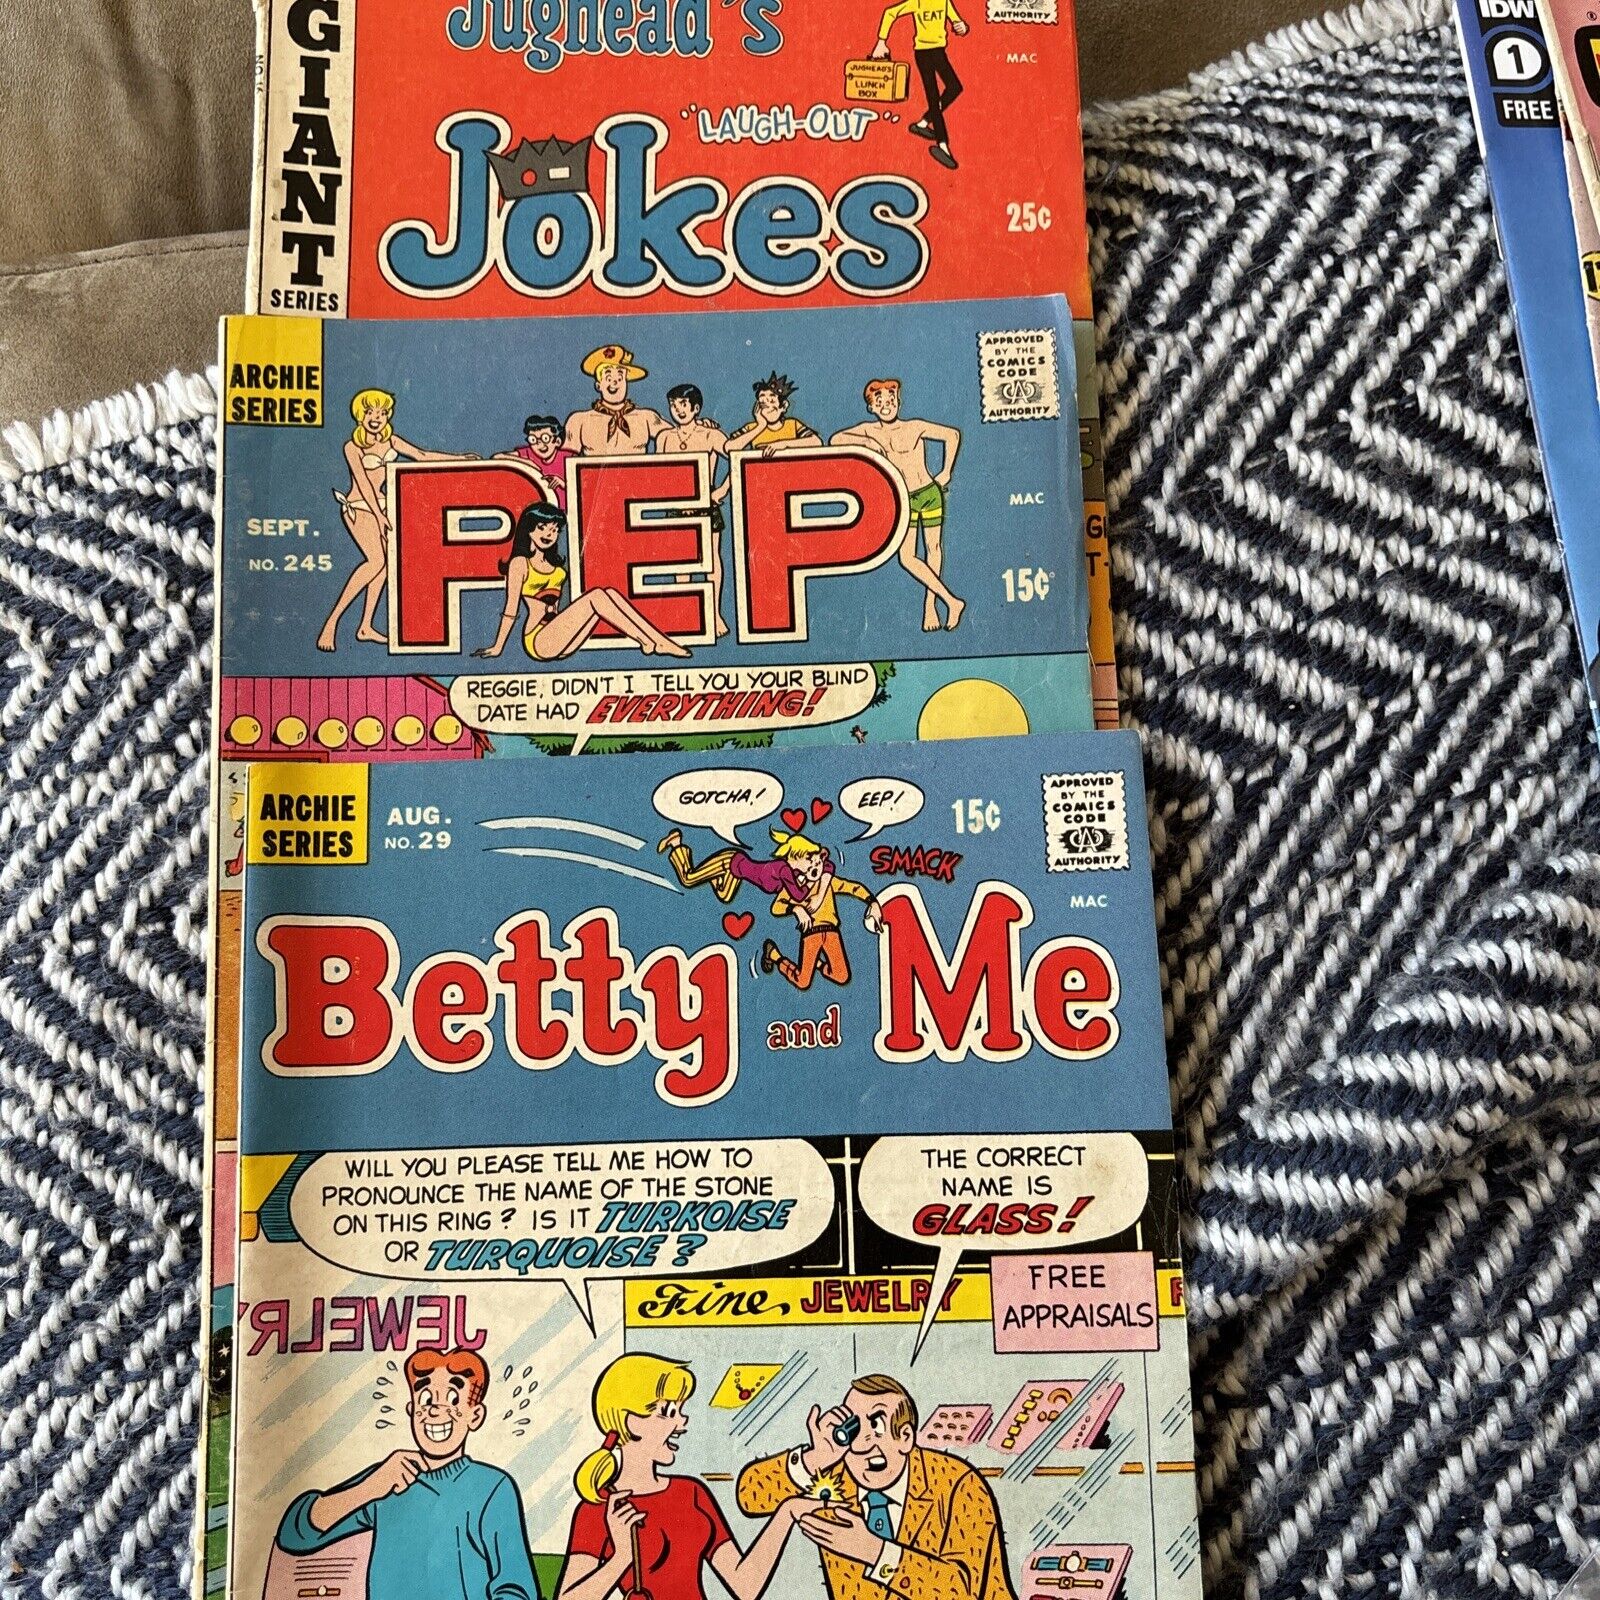 Lot Of 3 Vintage Archie Comics Betty&Me, PEP, Jugheads Laugh Out Jokes 1970